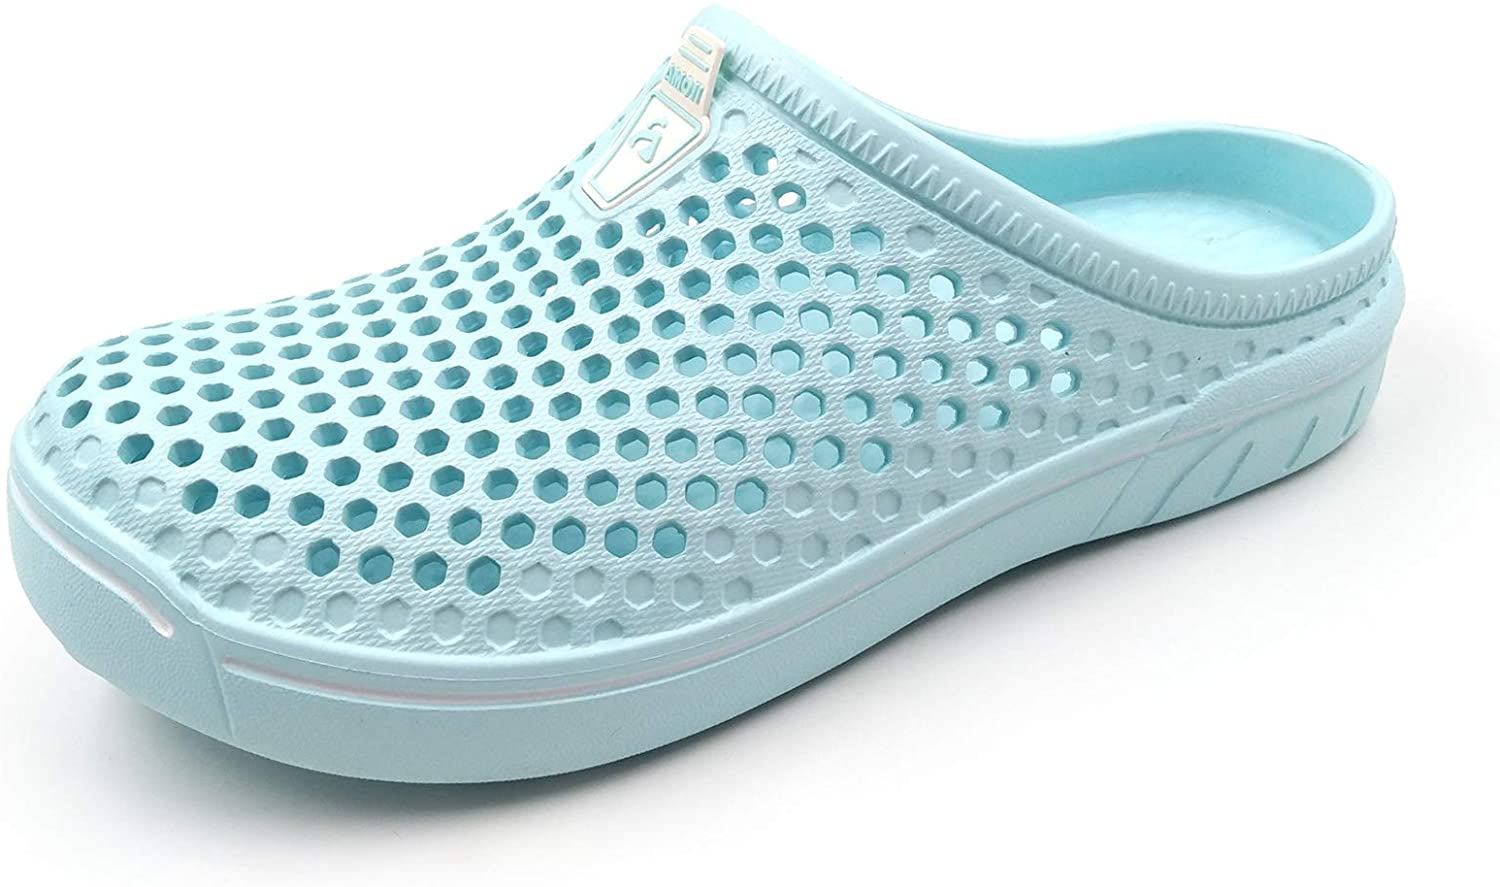 Amoji Unisex Garden Clogs Shoes Sandals Slippers AM1761